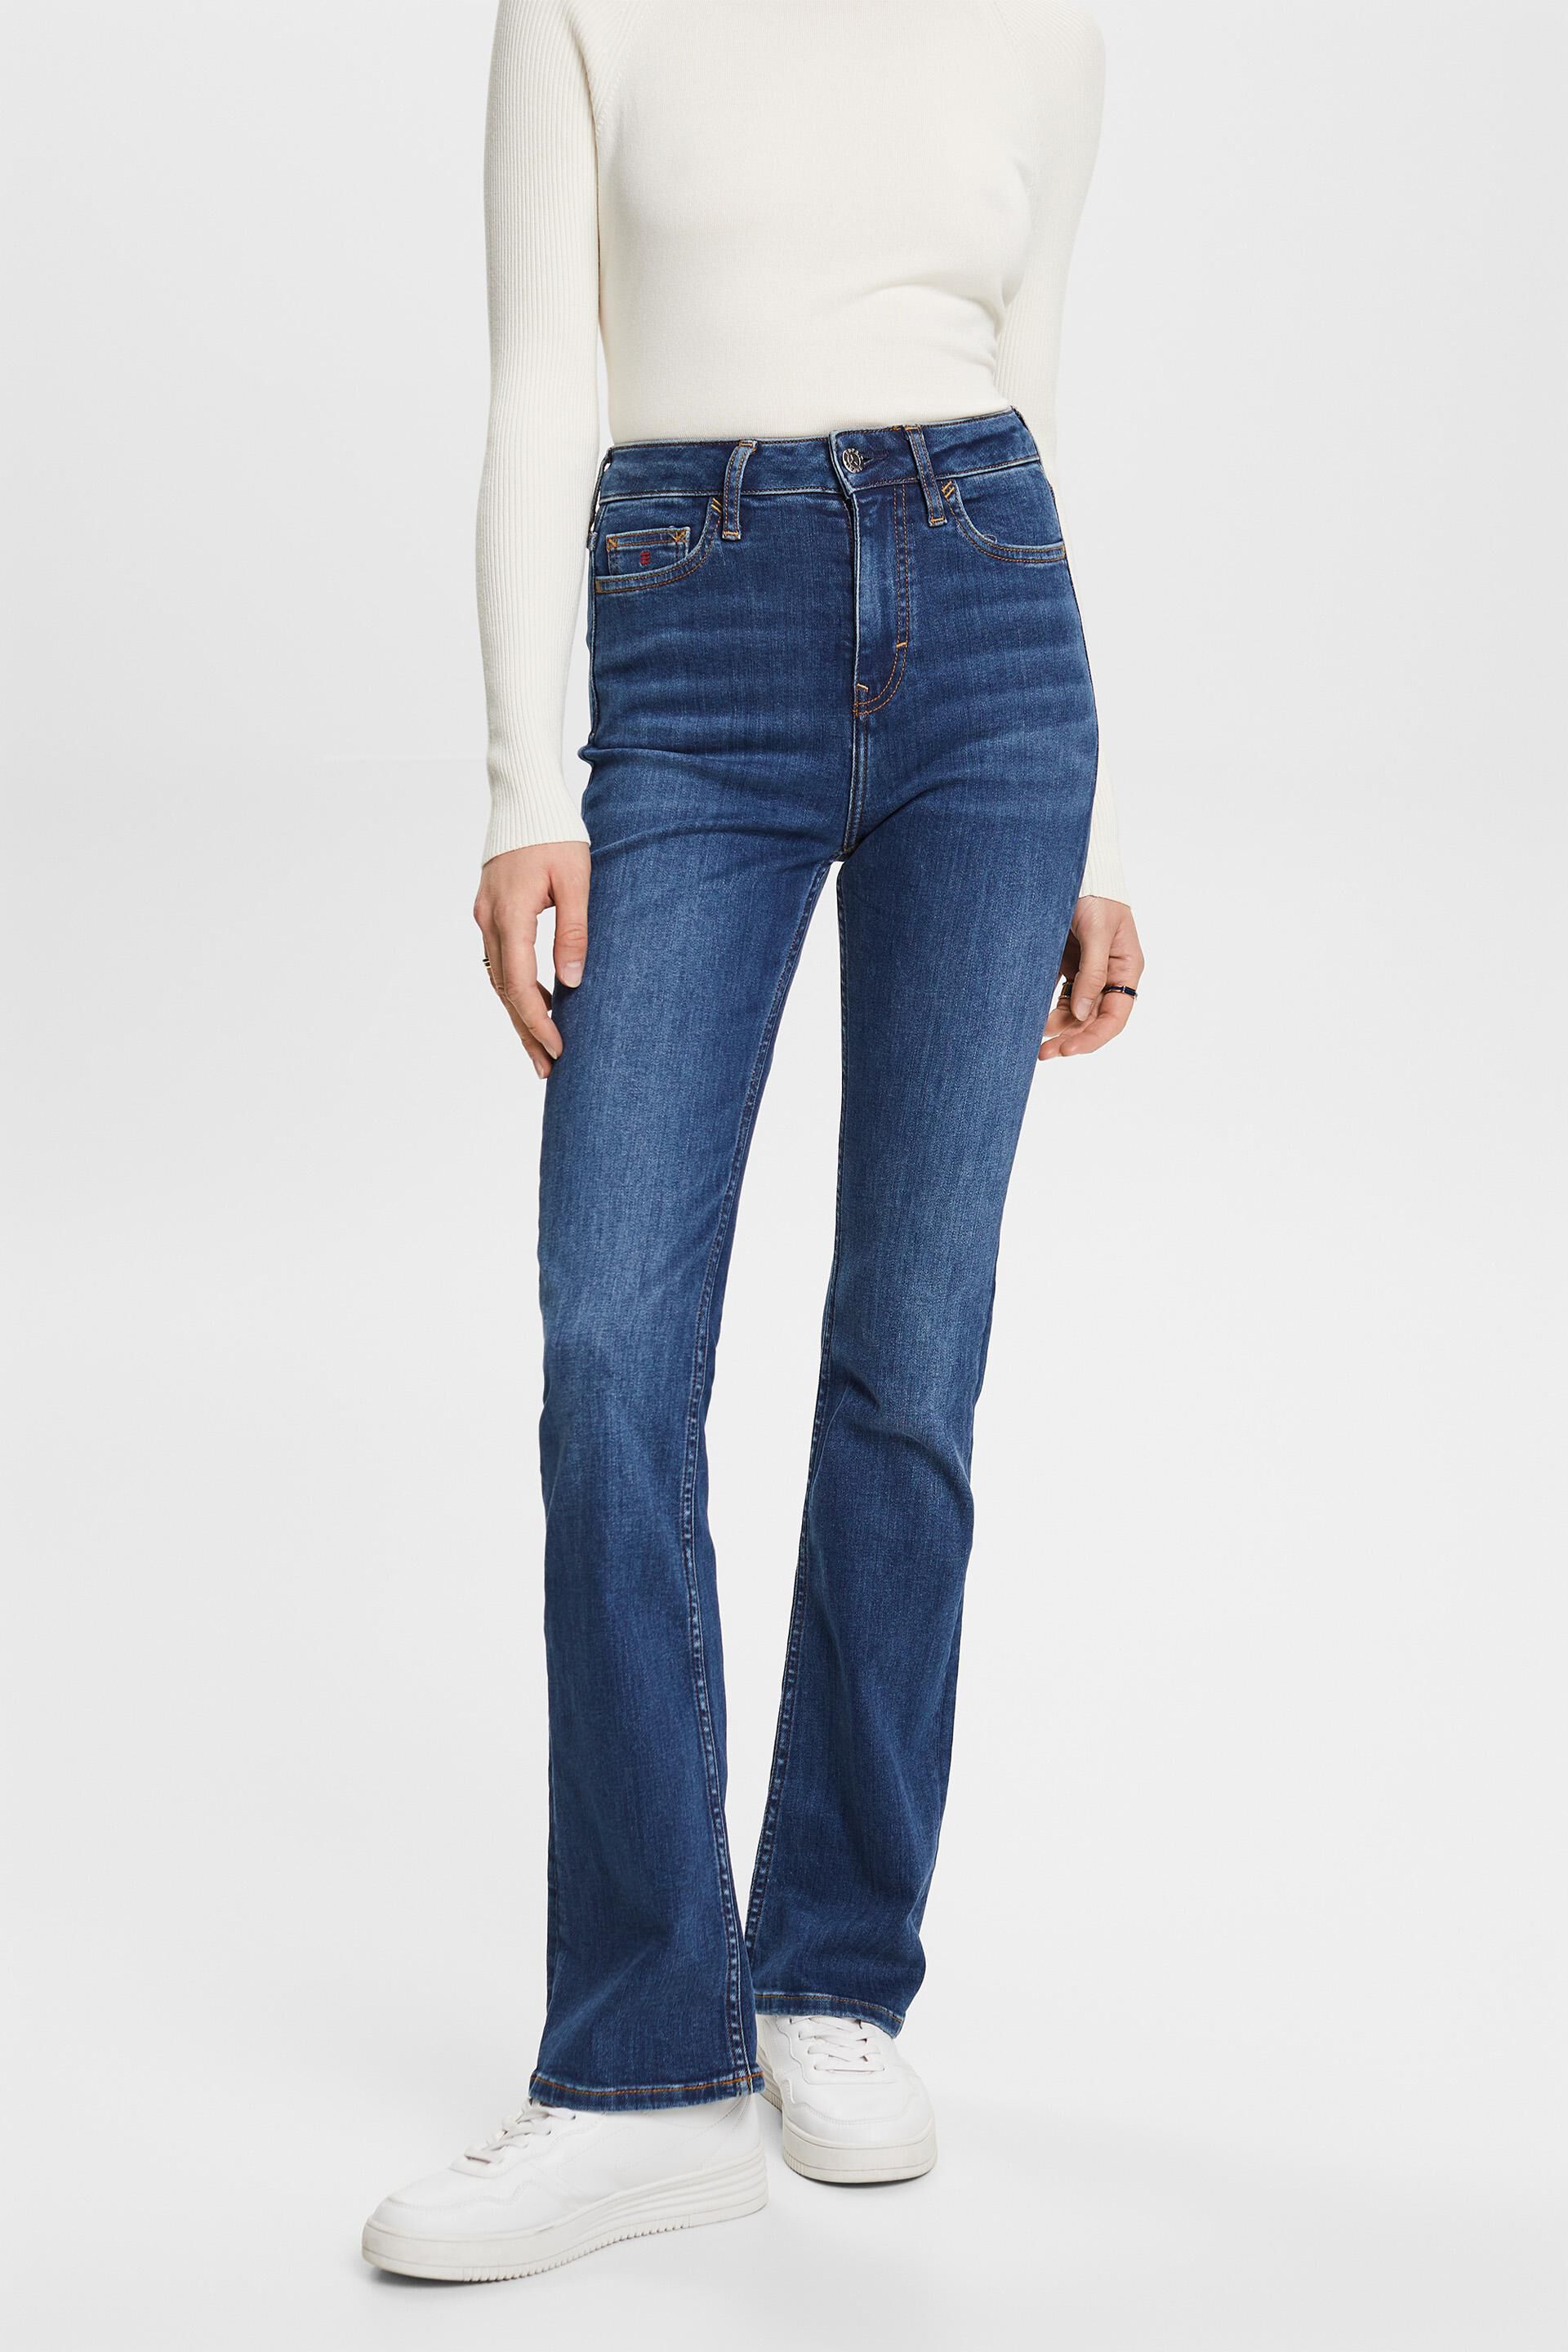 Esprit Damen Premium high-rise bootcut jeans